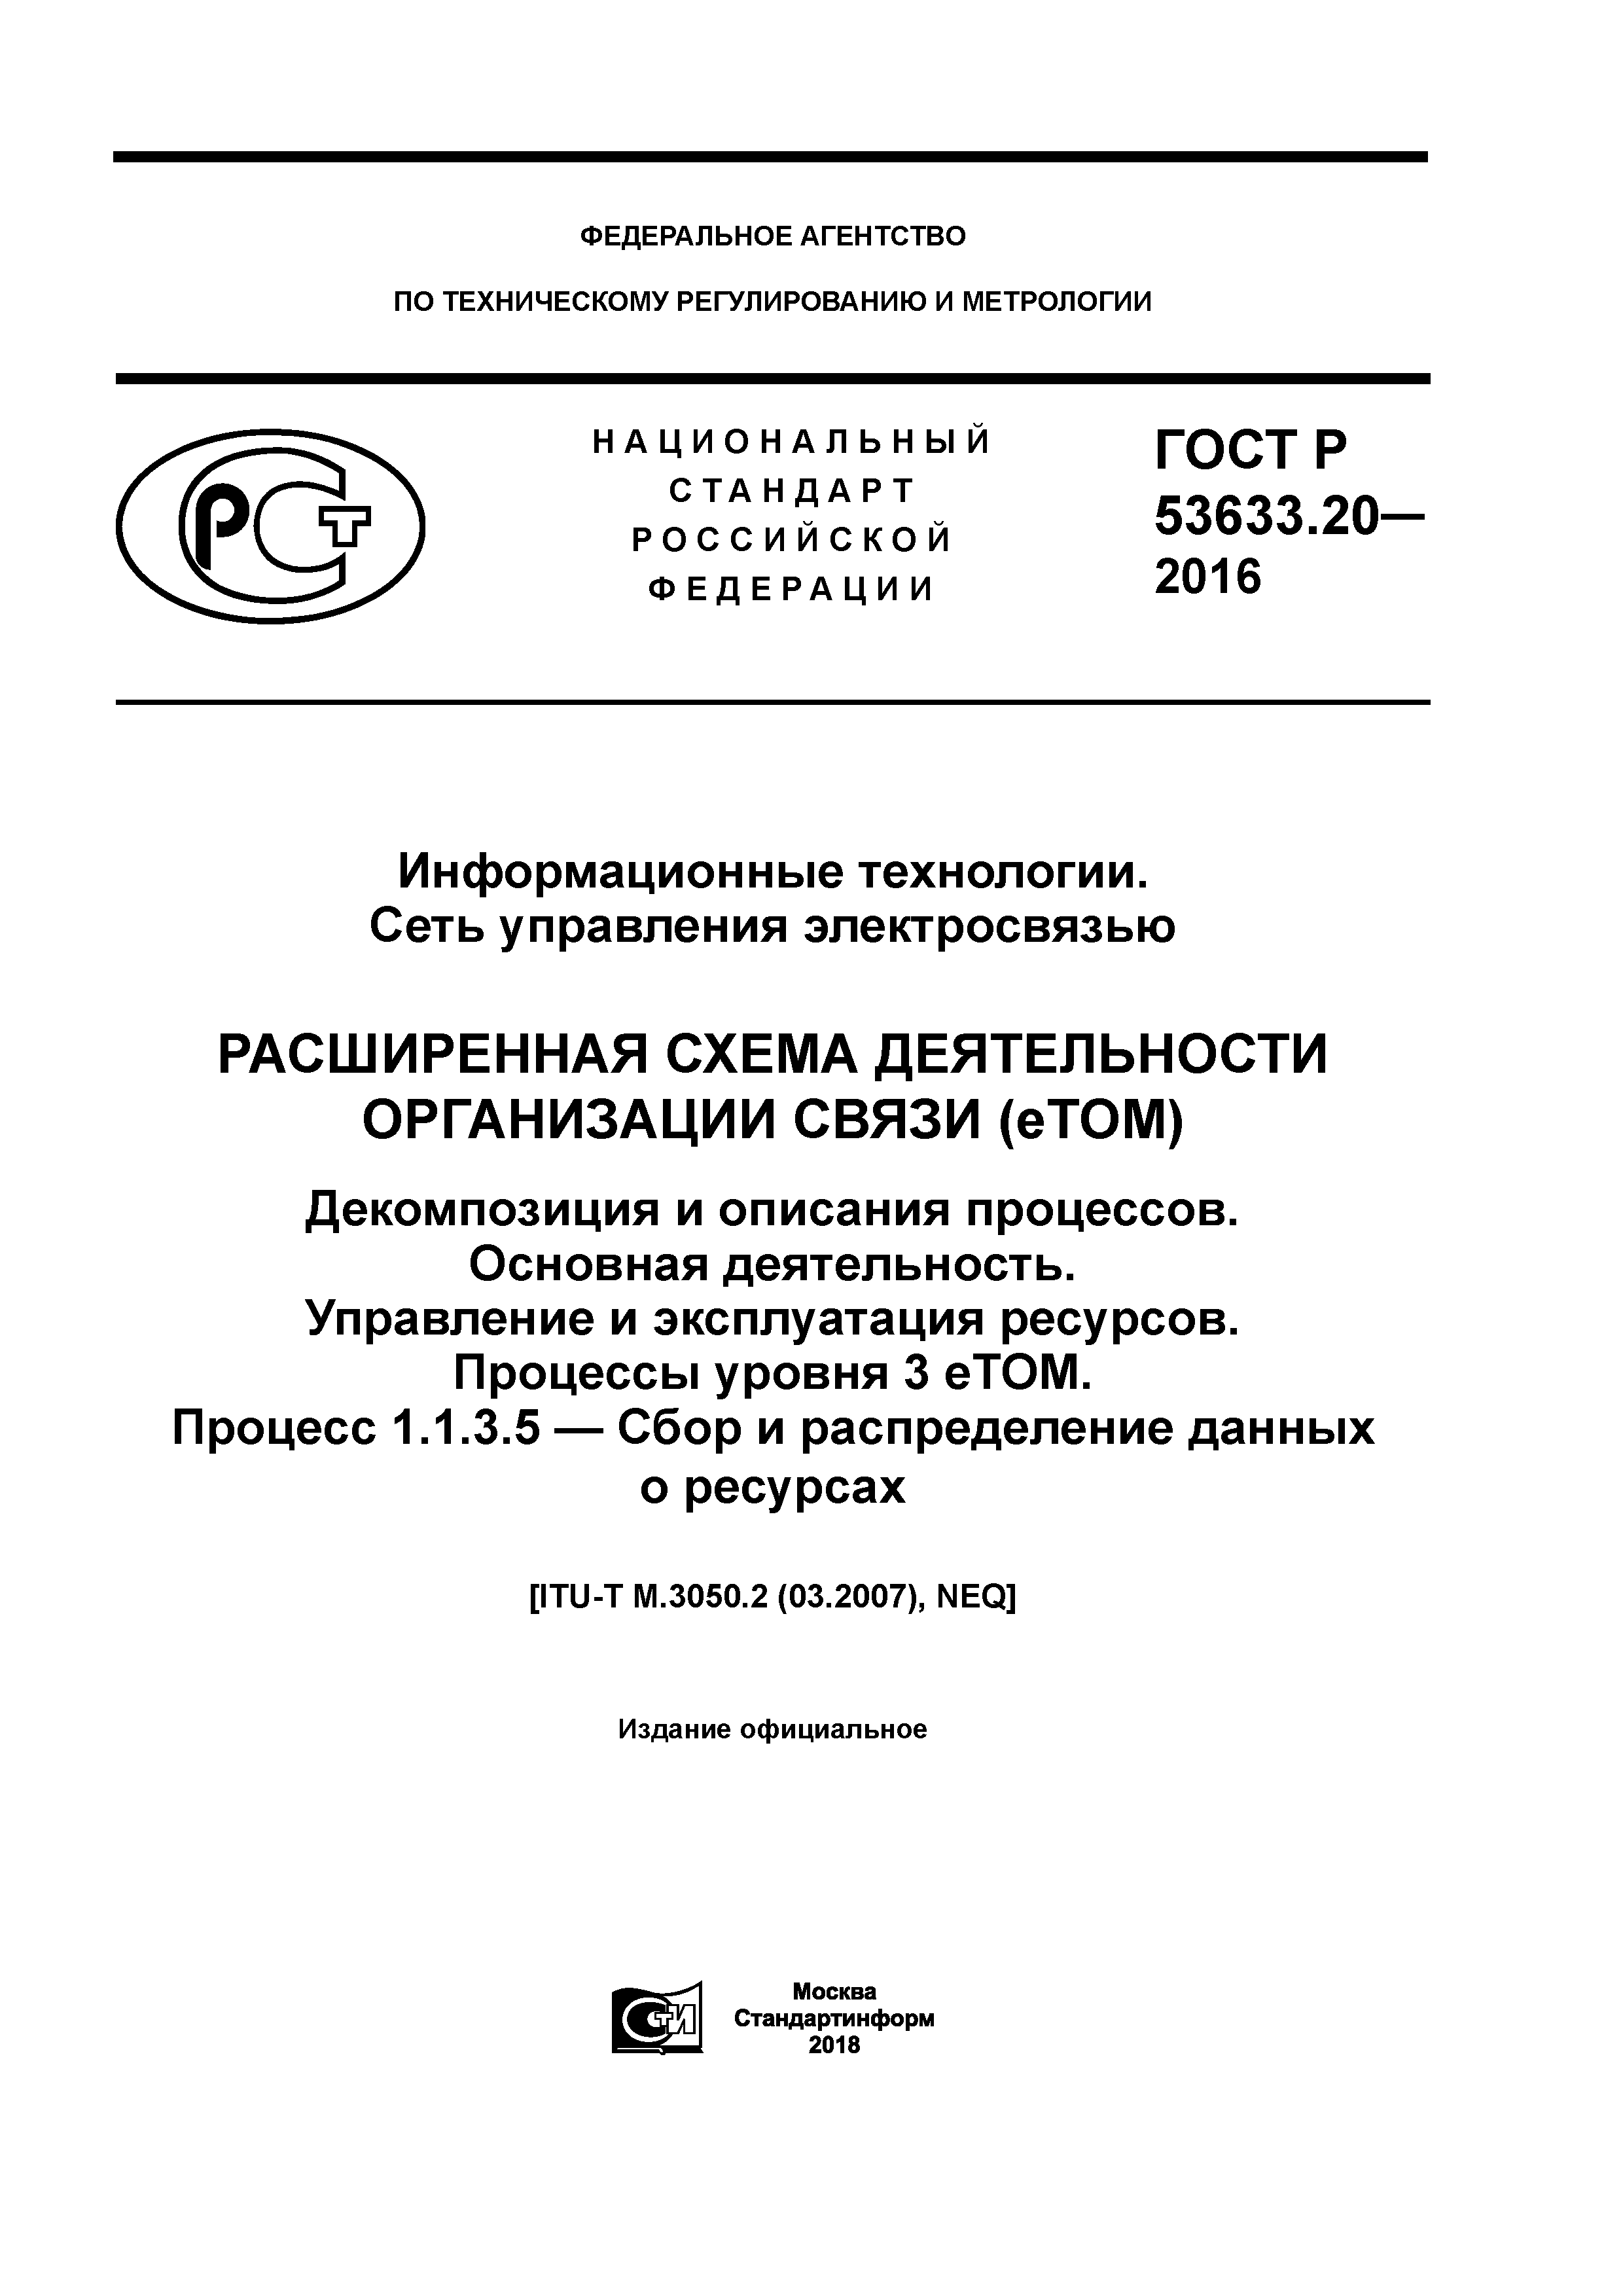 ГОСТ Р 53633.20-2016